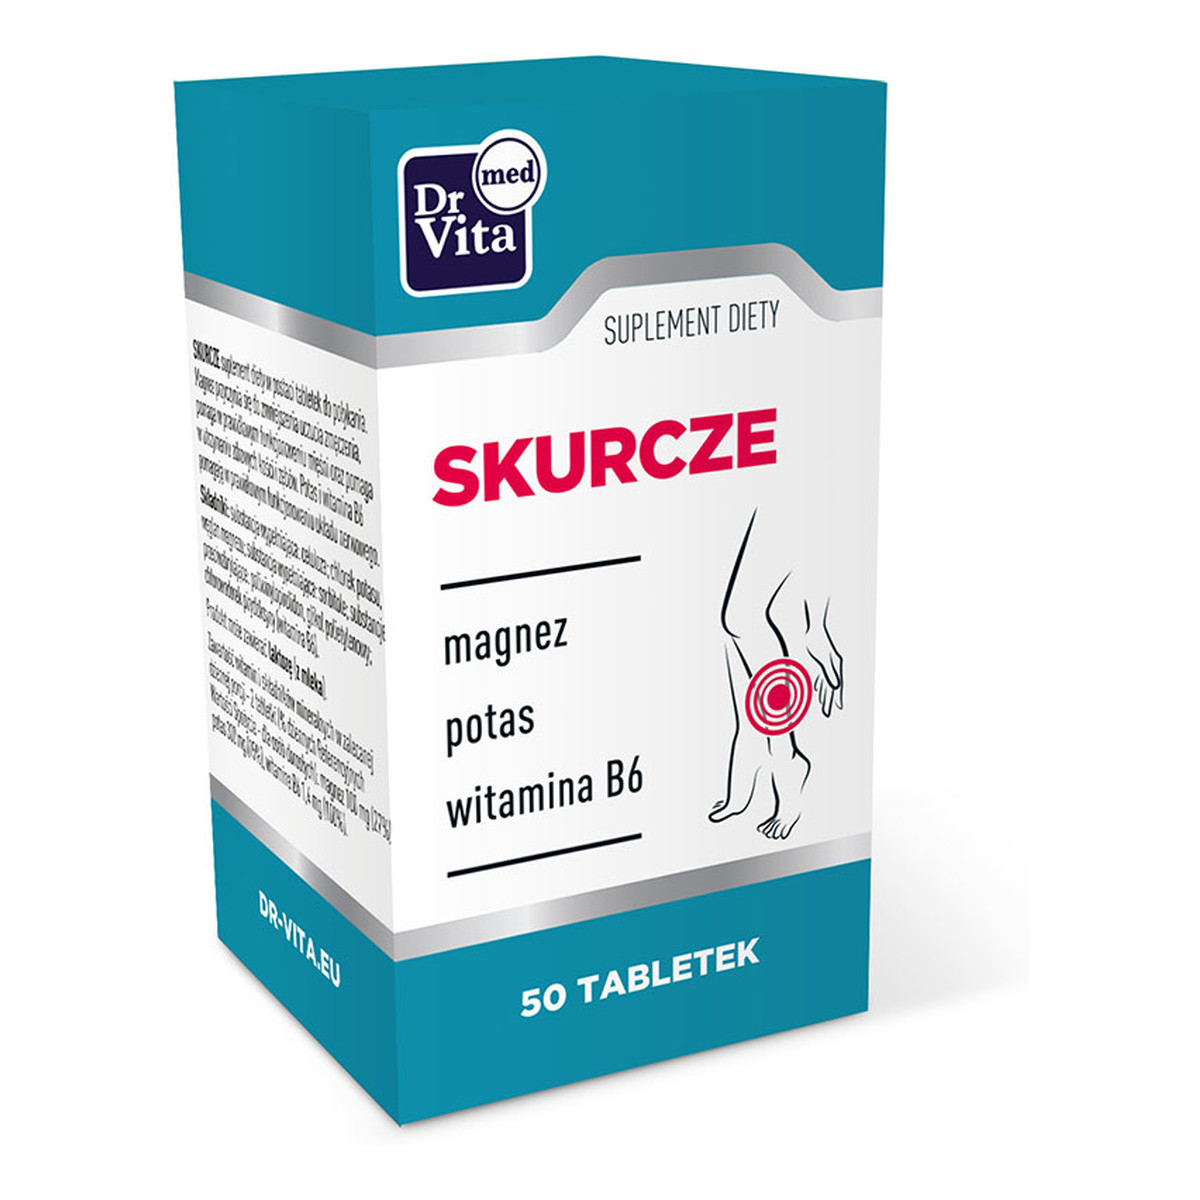 Dr Vita Skurcze magnez + potas + witamina b6 suplement diety 50 tabletek